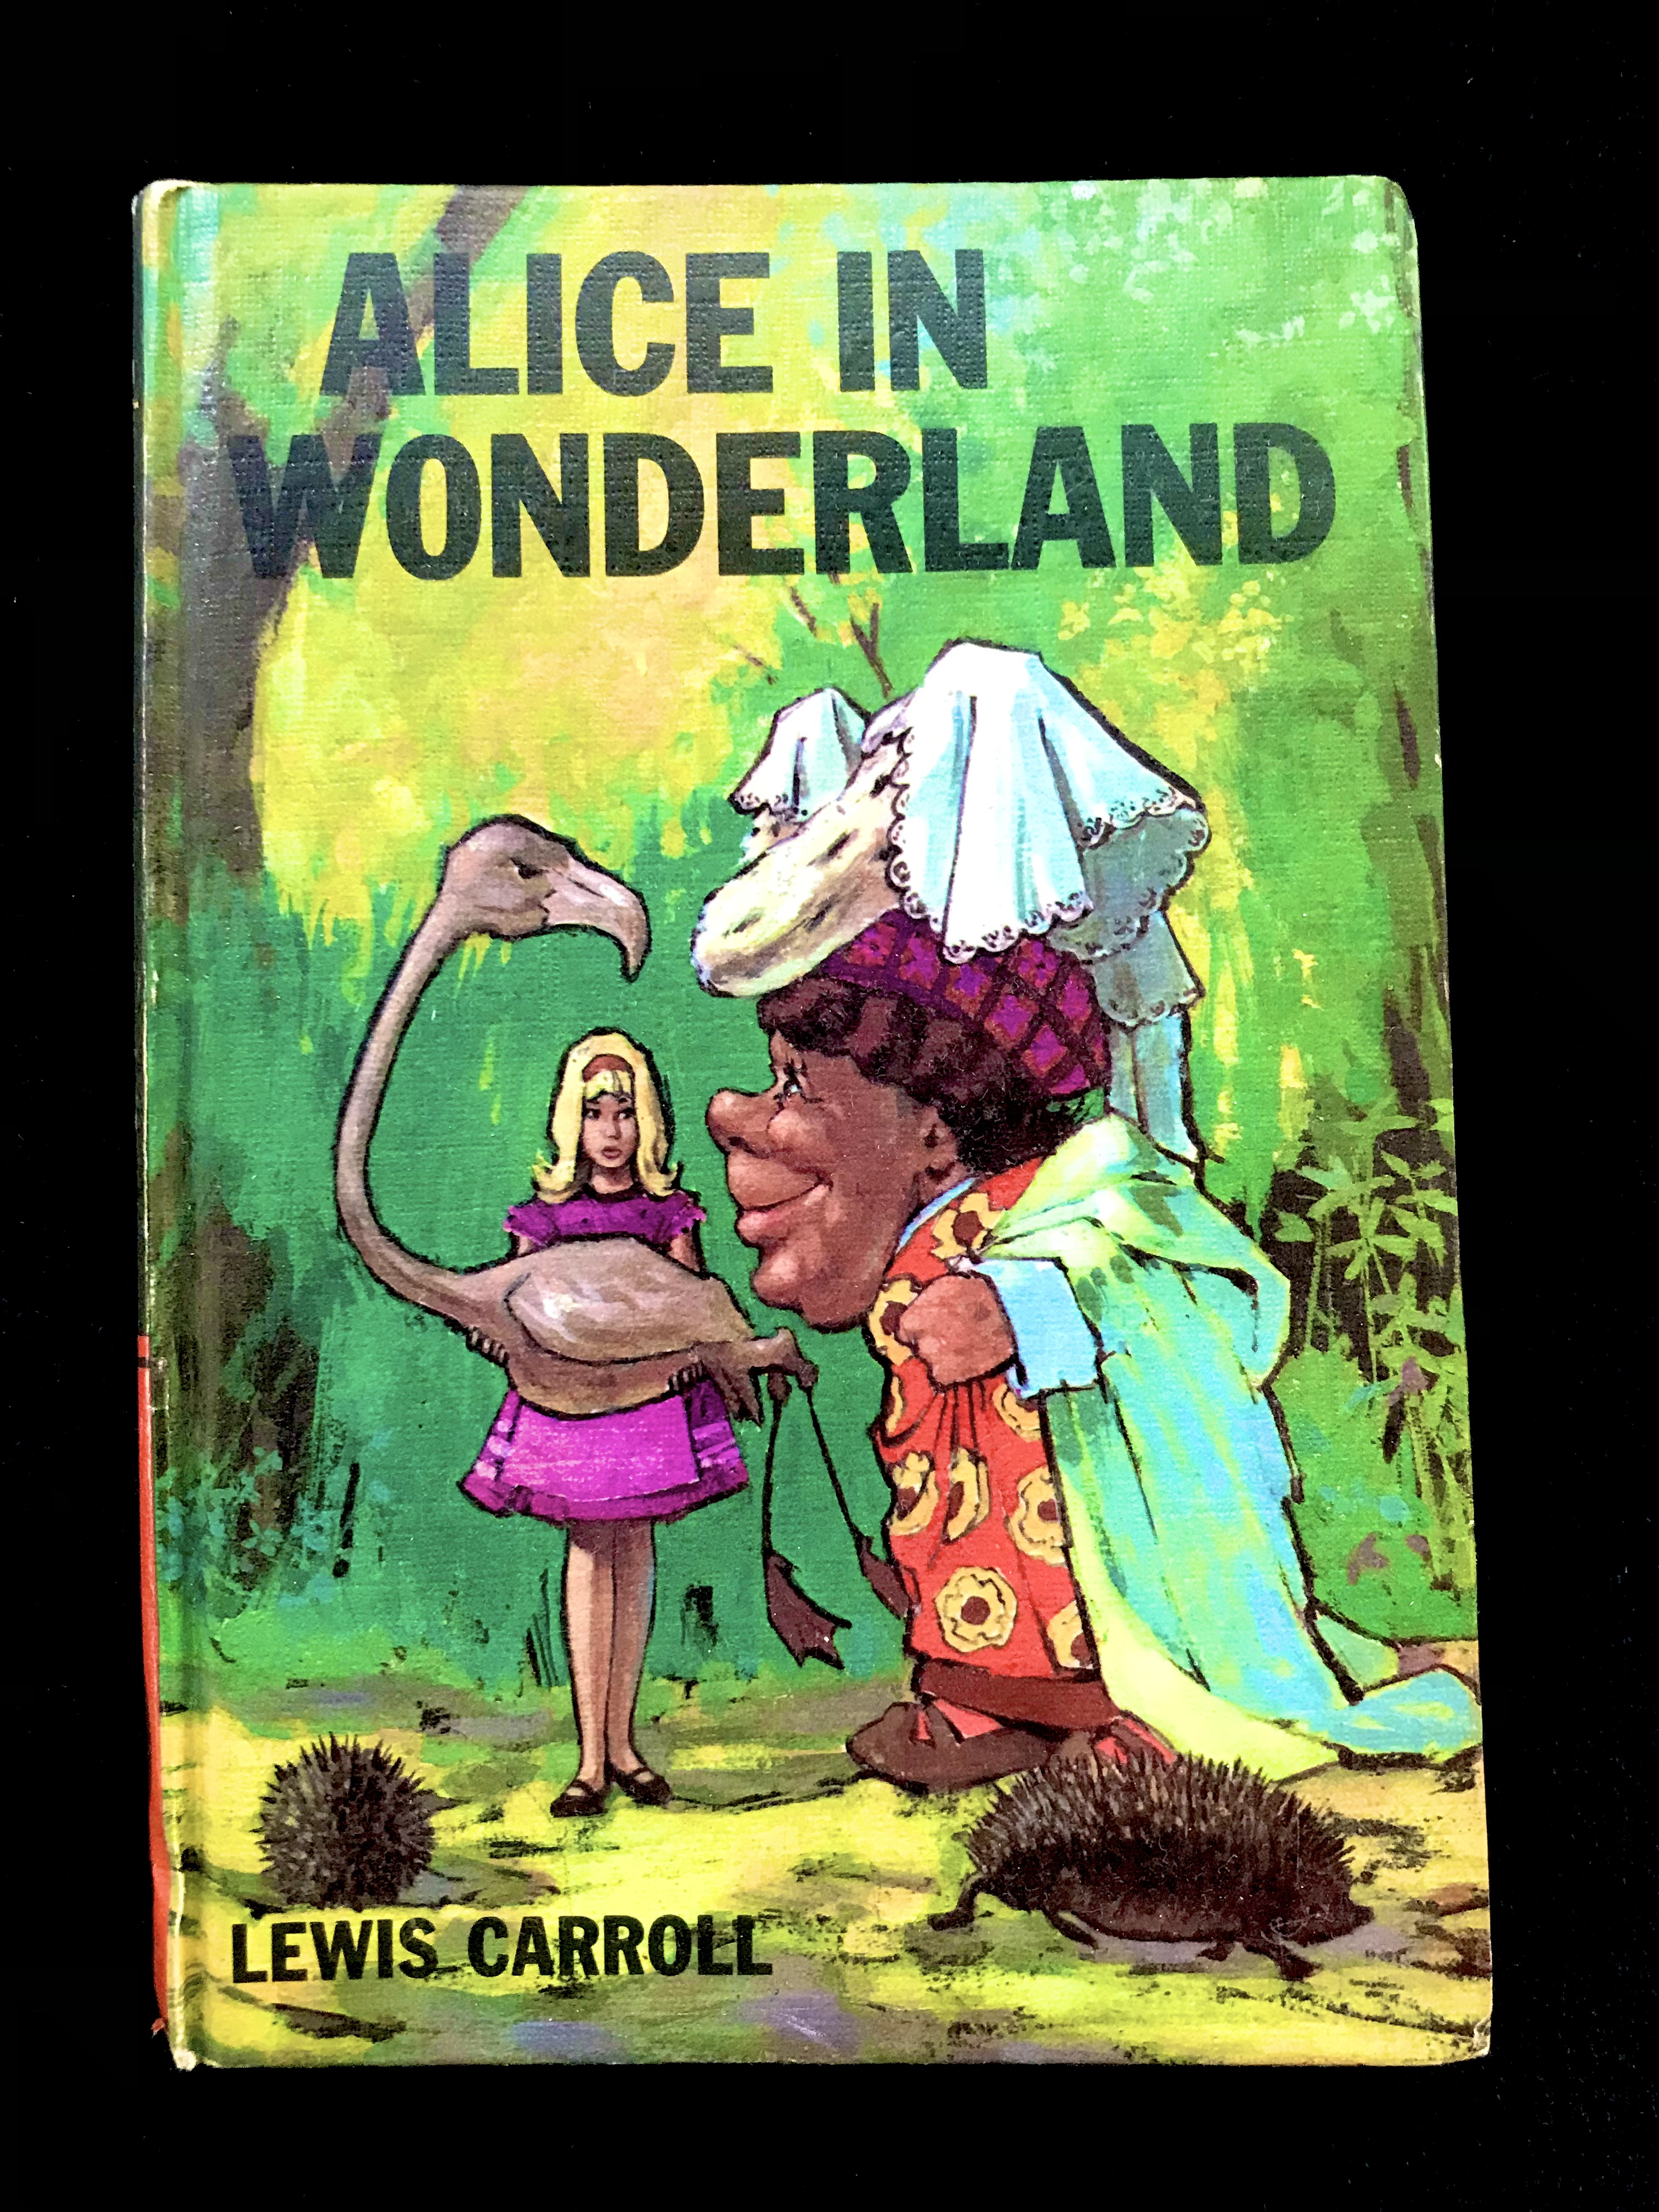 Alice In Wonderland by Lewis Carroll